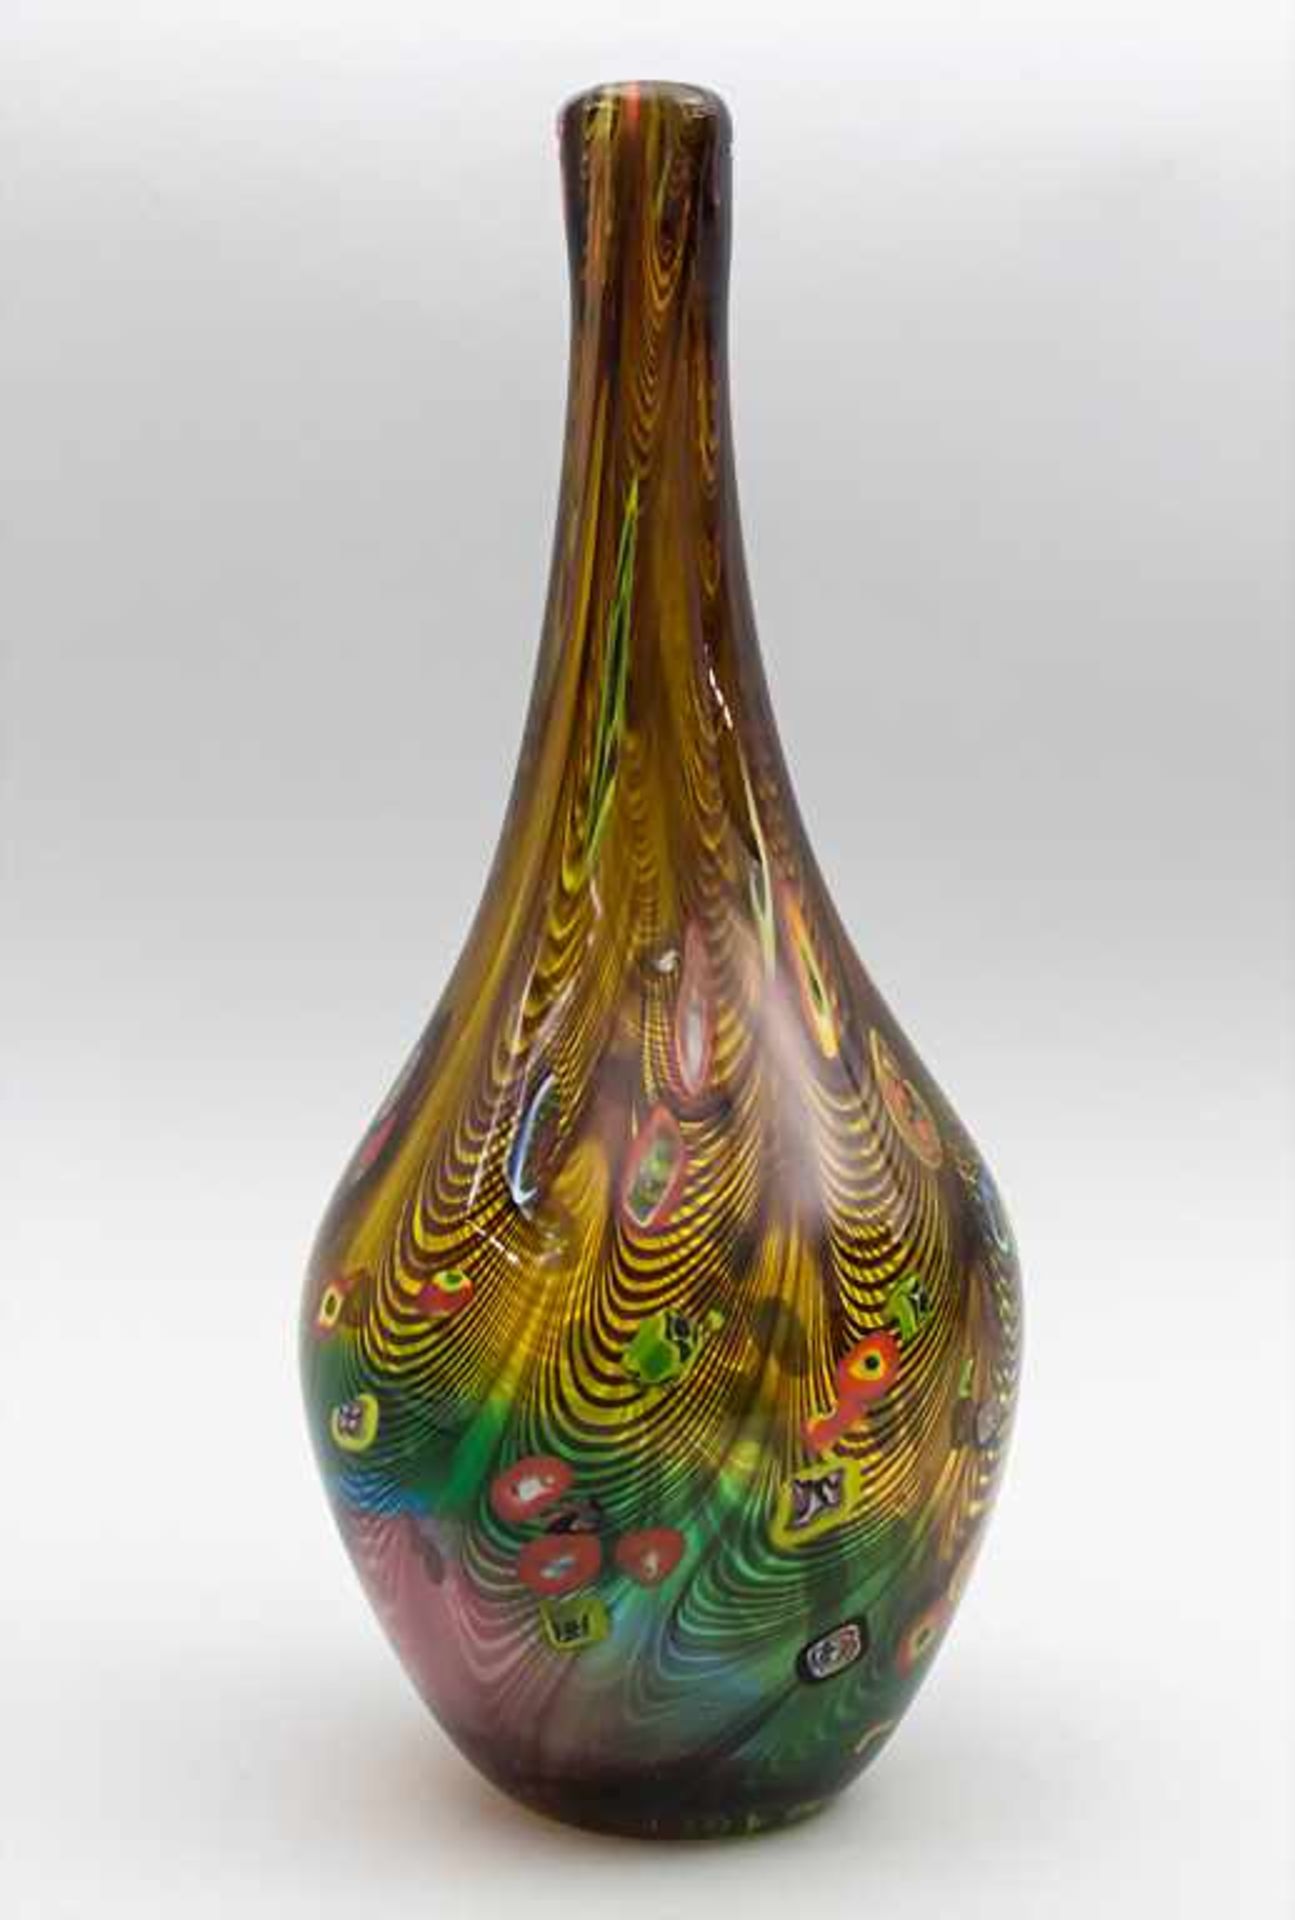 Ziervase / A decorative vase, wohl Murano, um 1980